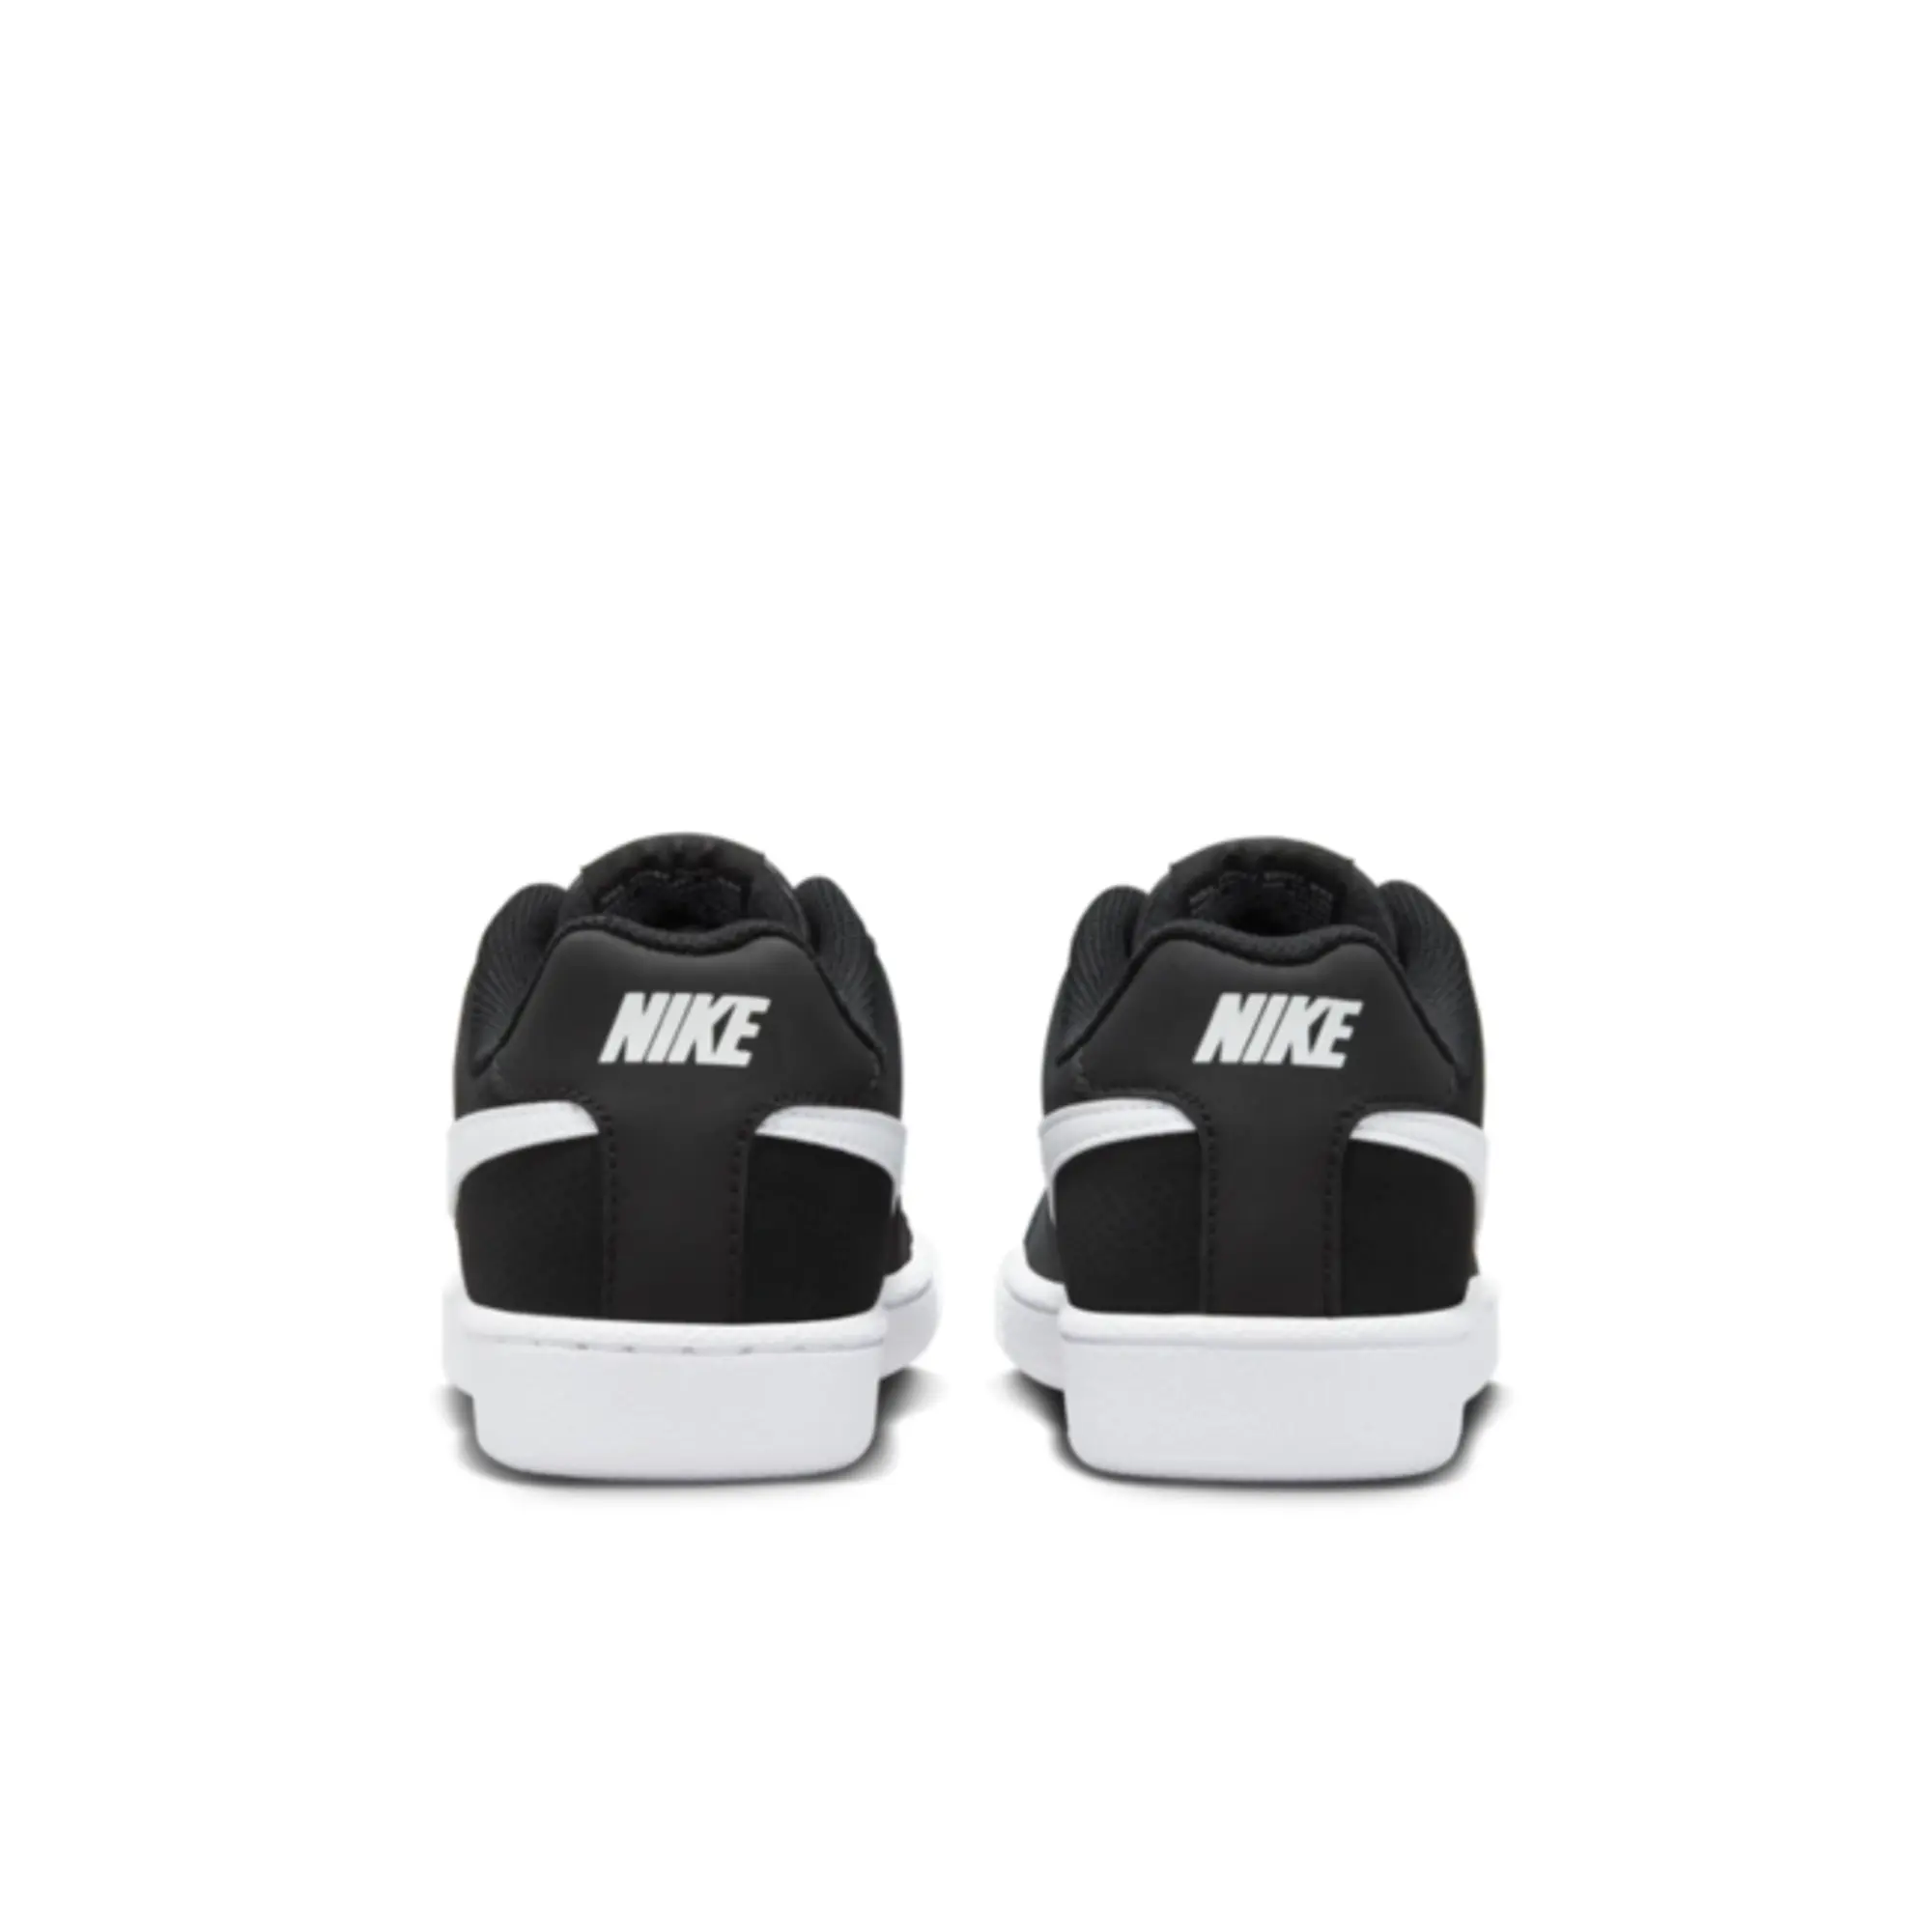 NikeCourt Royale Women's Shoe - Black